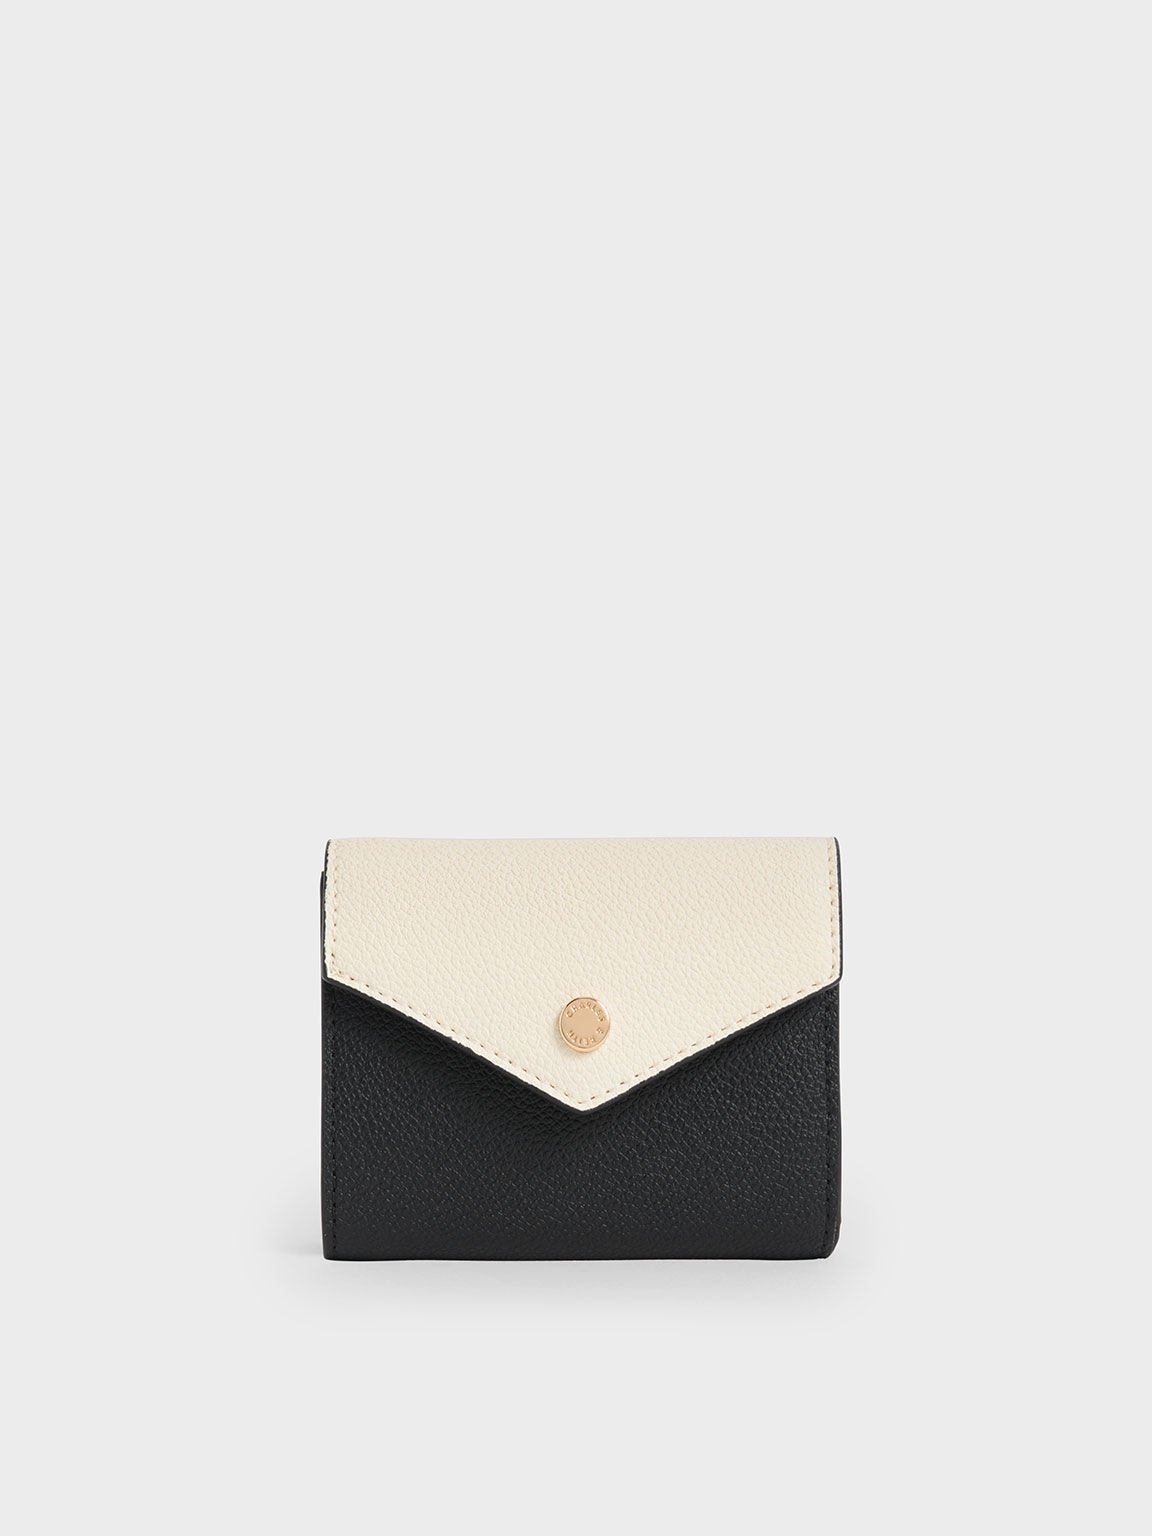 Leather card wallet/ purse | Little Potter